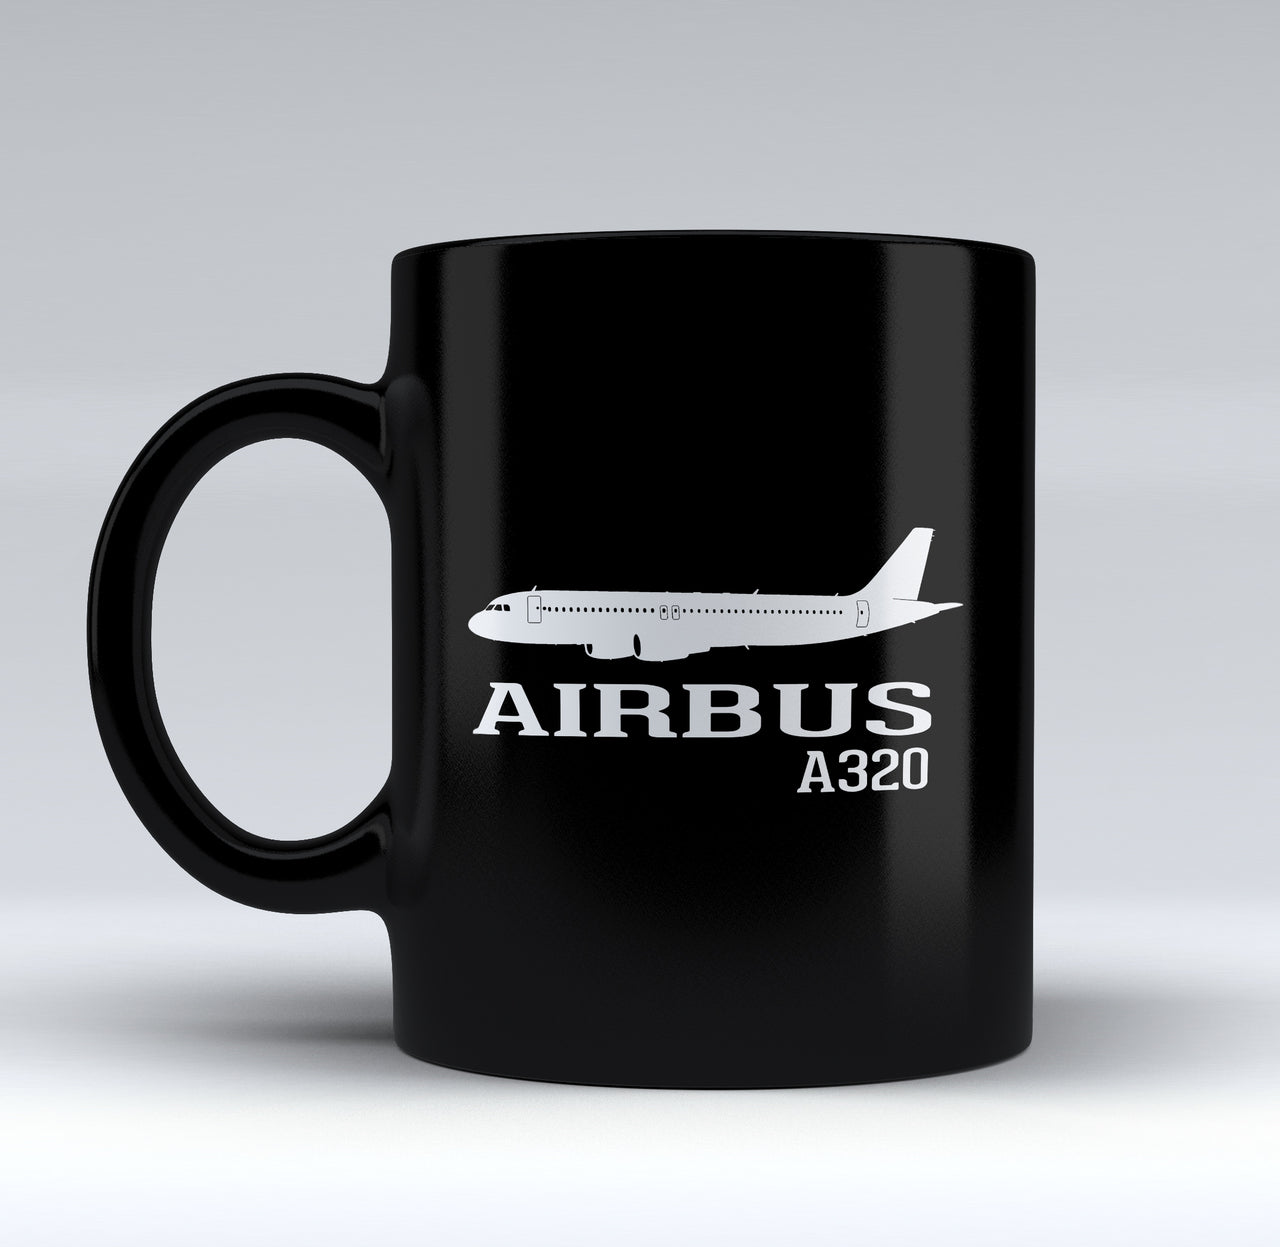 Airbus A320 Printed Designed Black Mugs